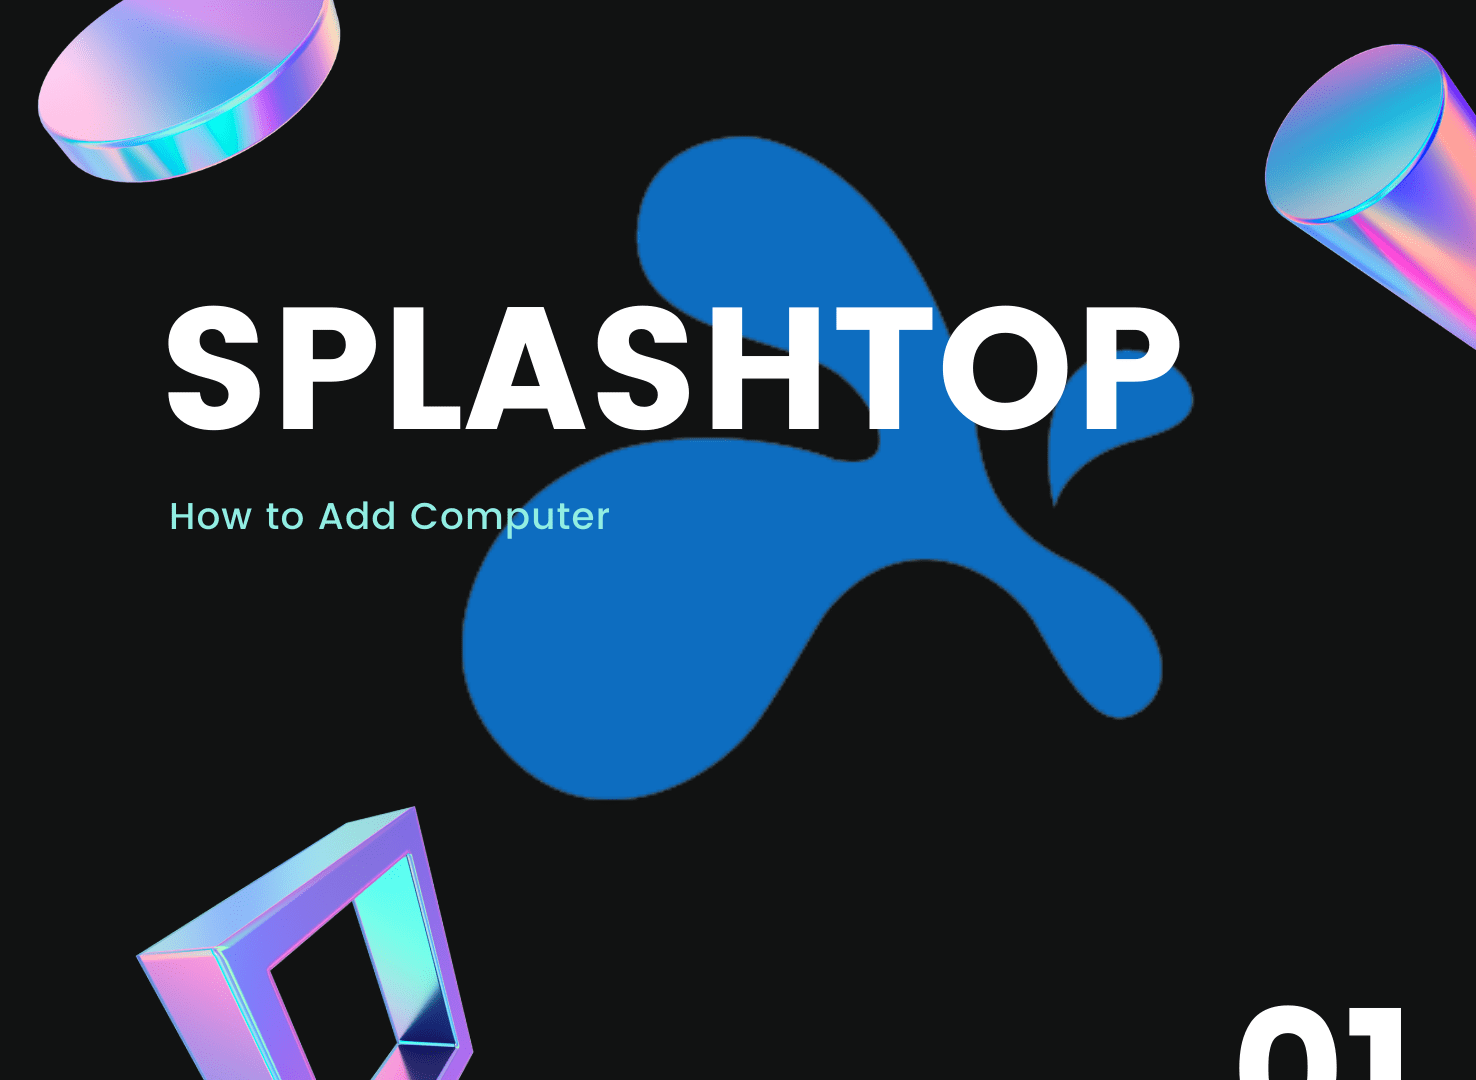 Cara Menambah Komputer ke SplashTop